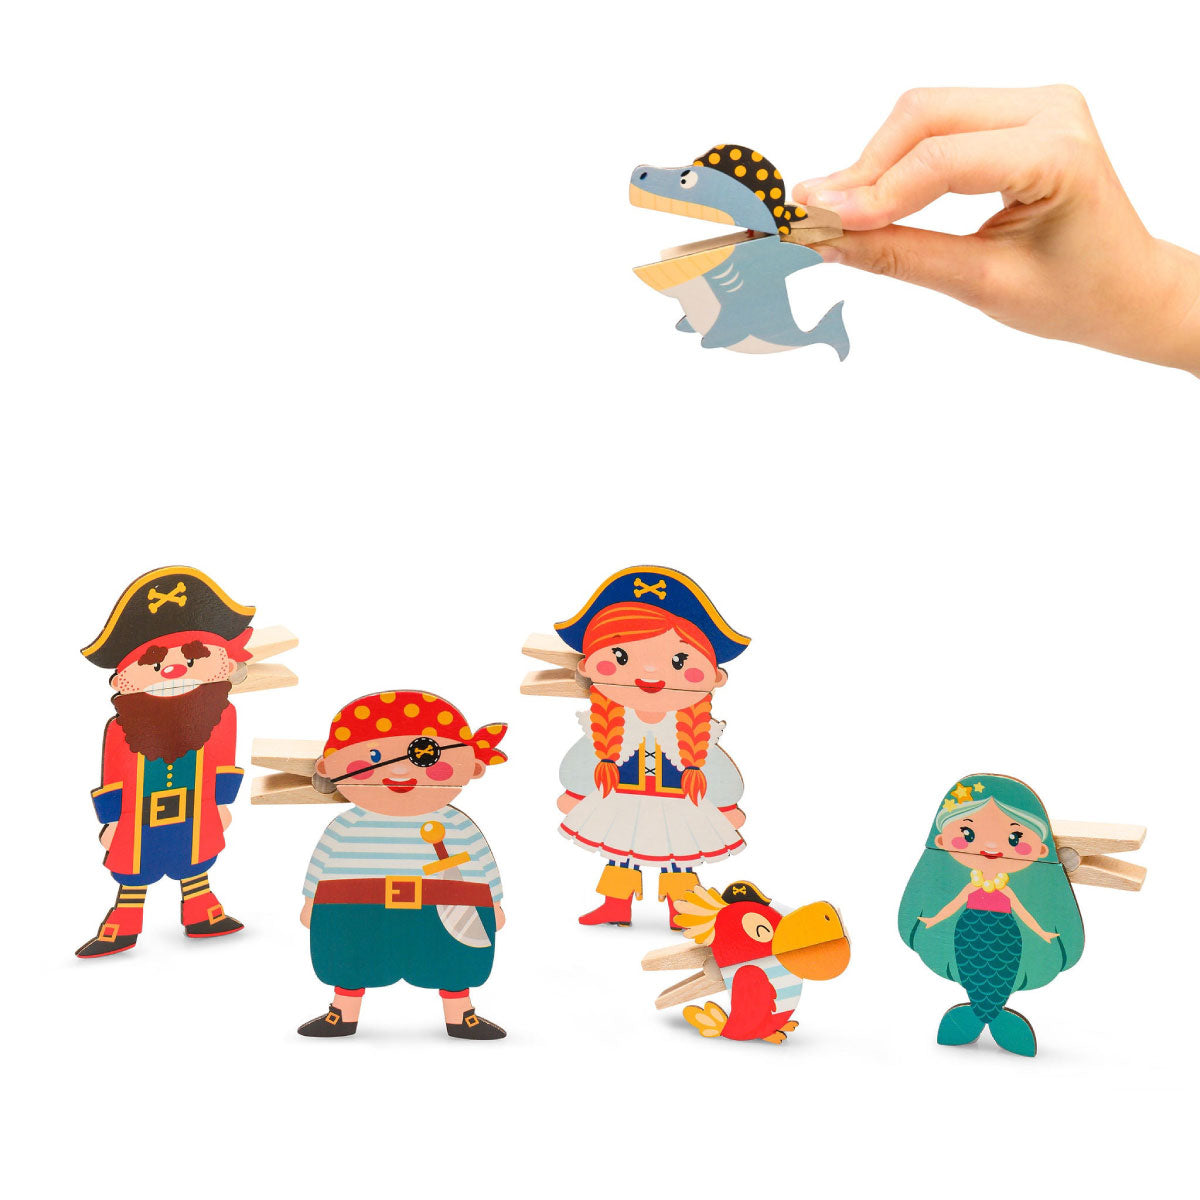 Kipod Wooden Clothespin Puppets - Pirates